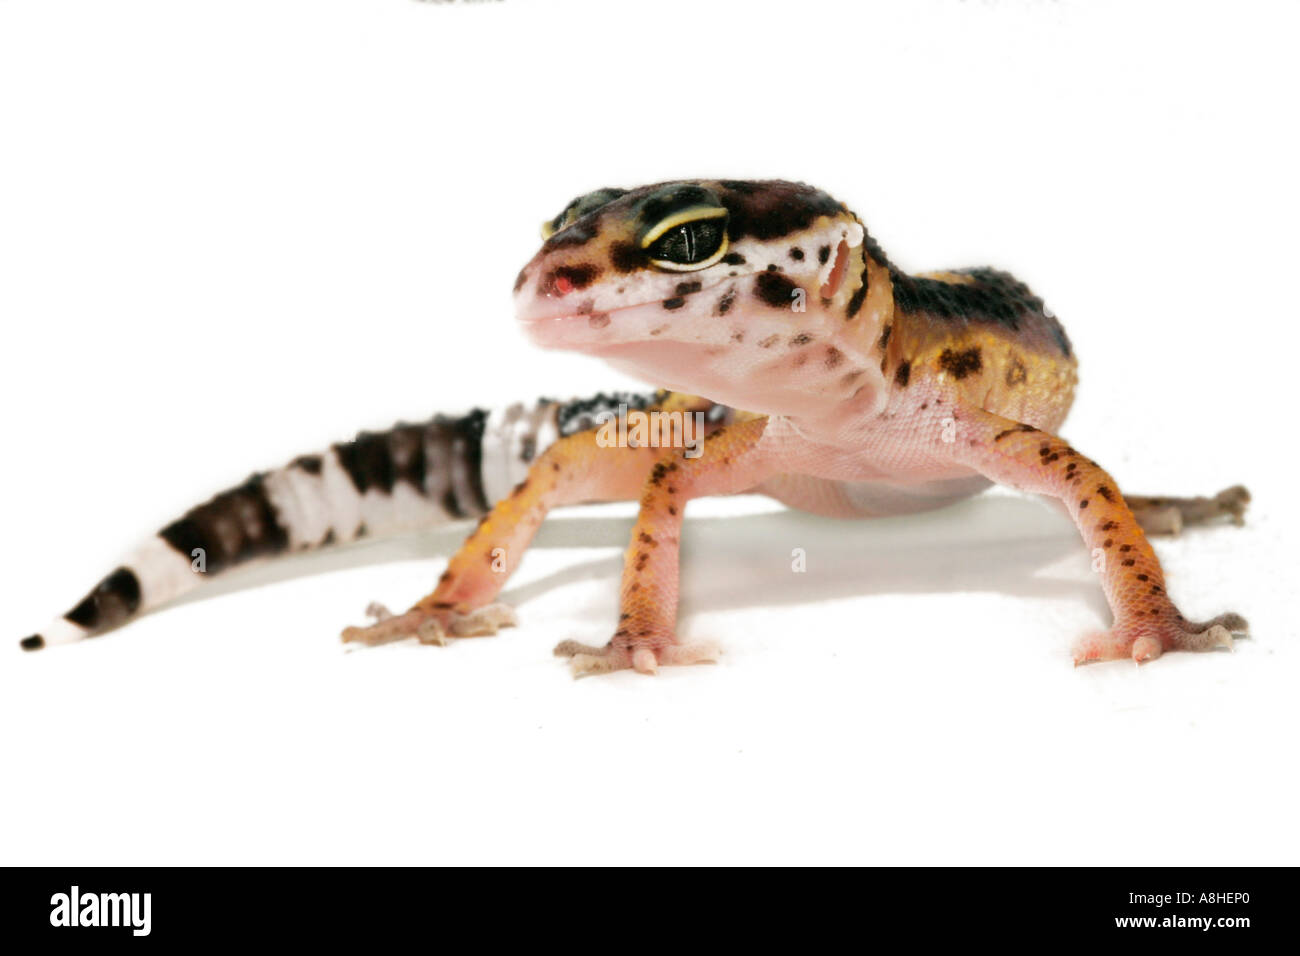 Eopard gecko (Eublepharis macularius) Stock Photo